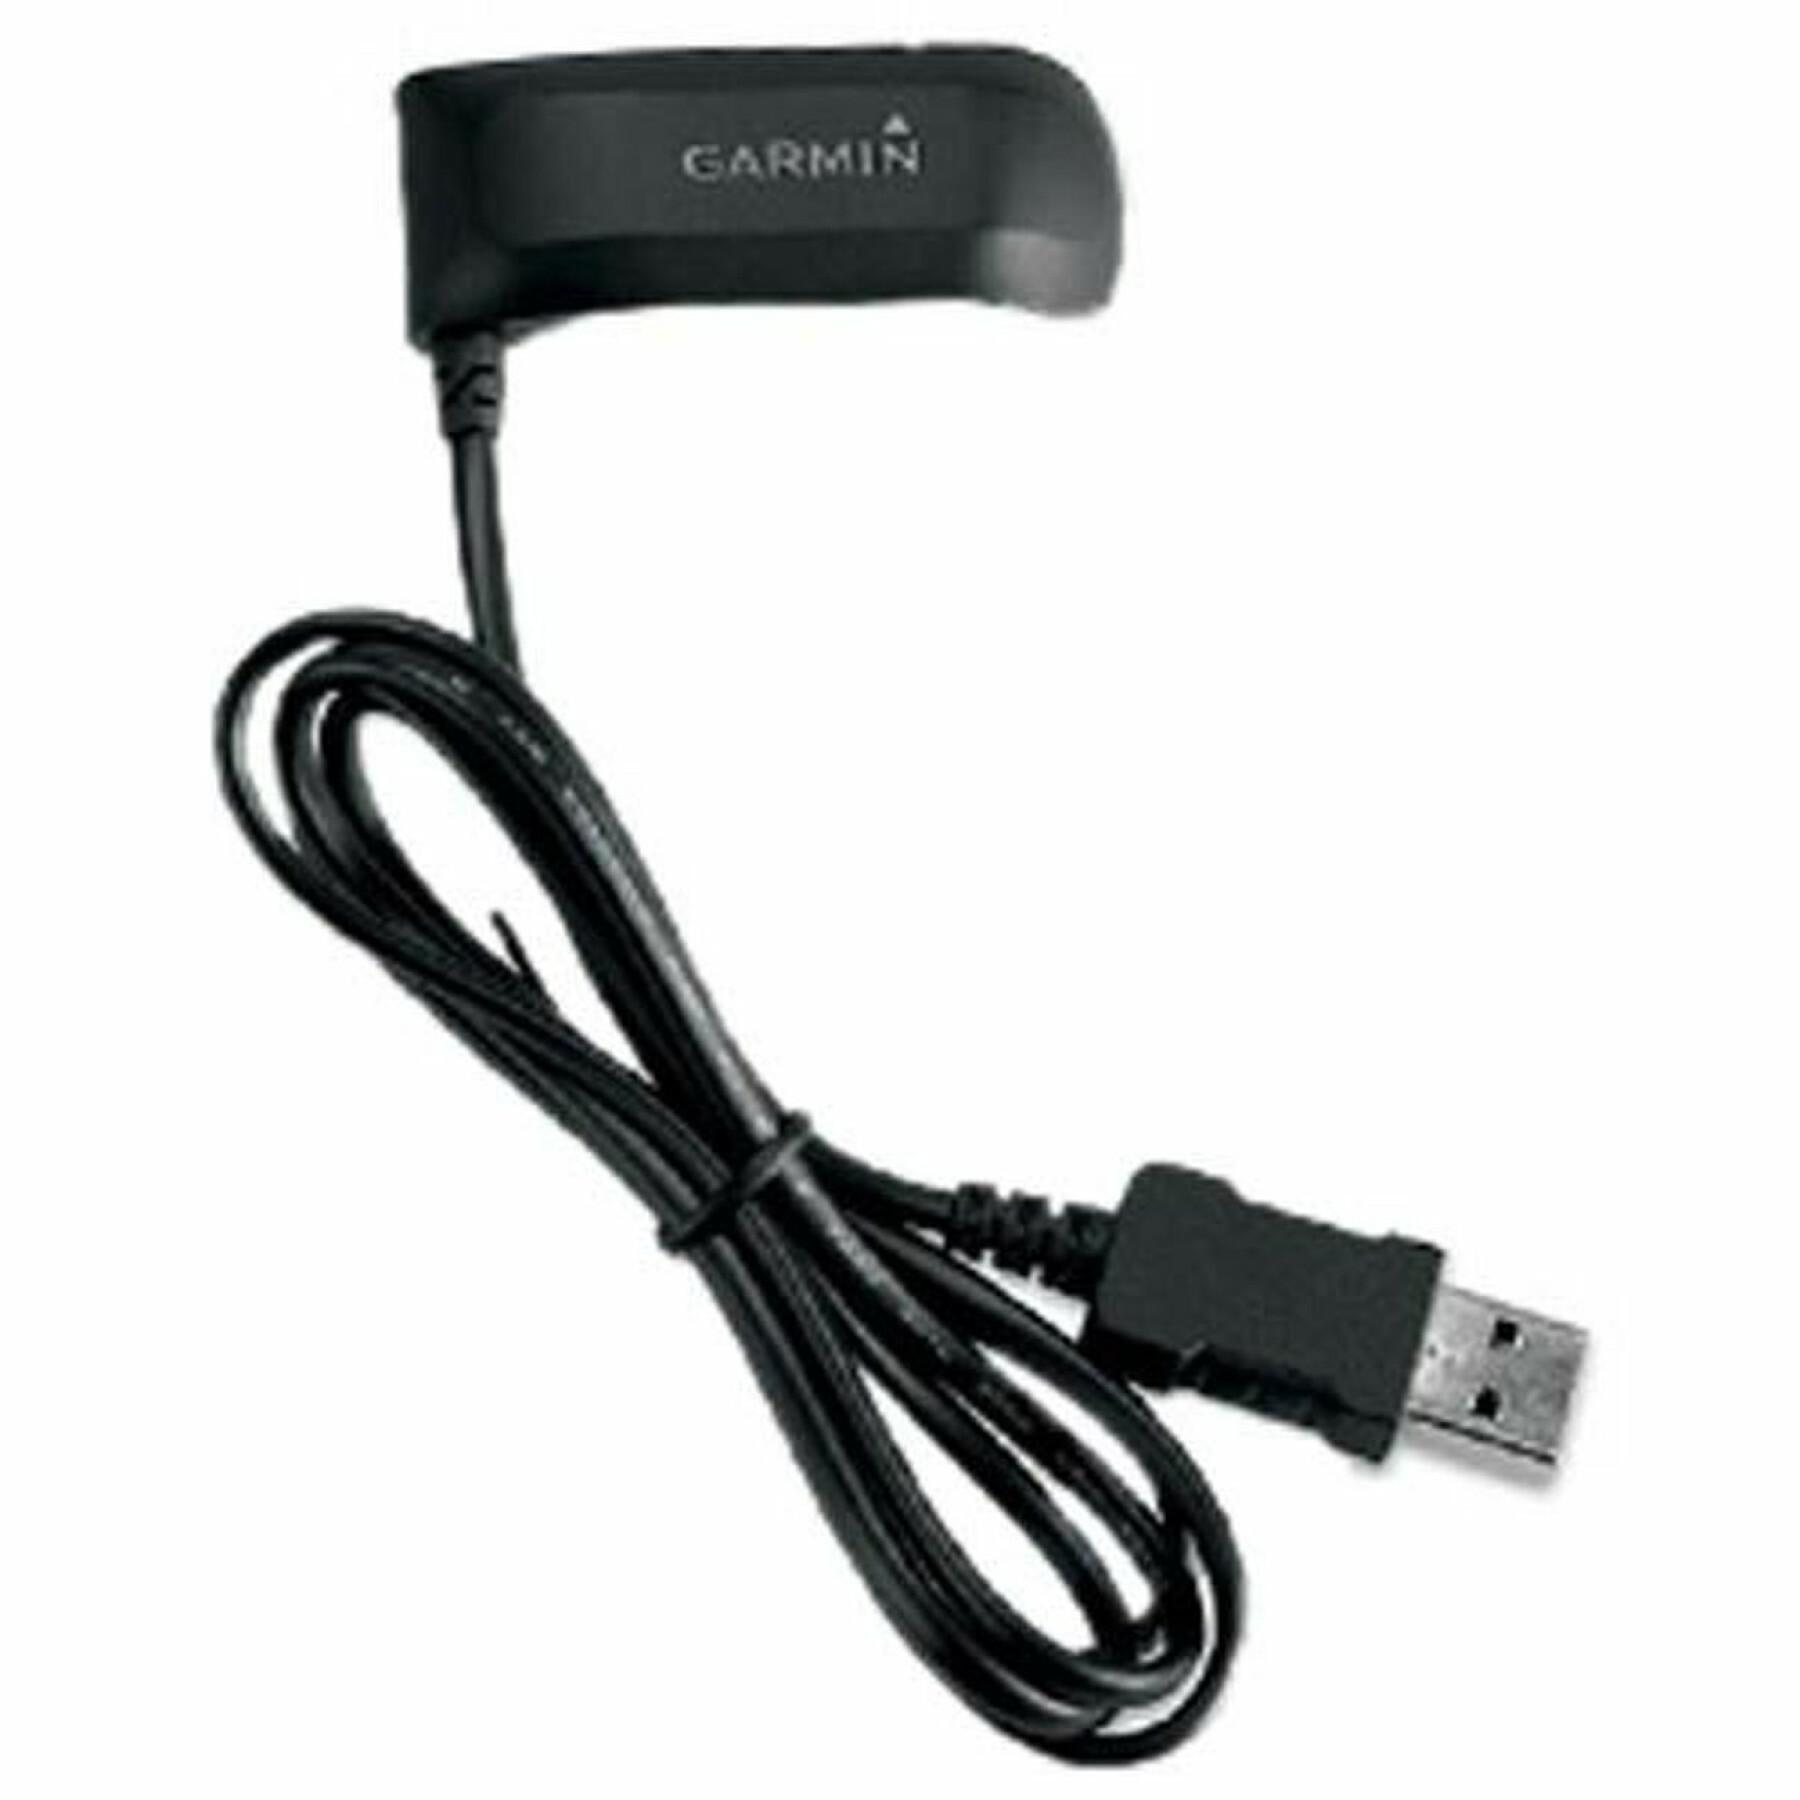 Charging clip Garmin (Forerunner 610)